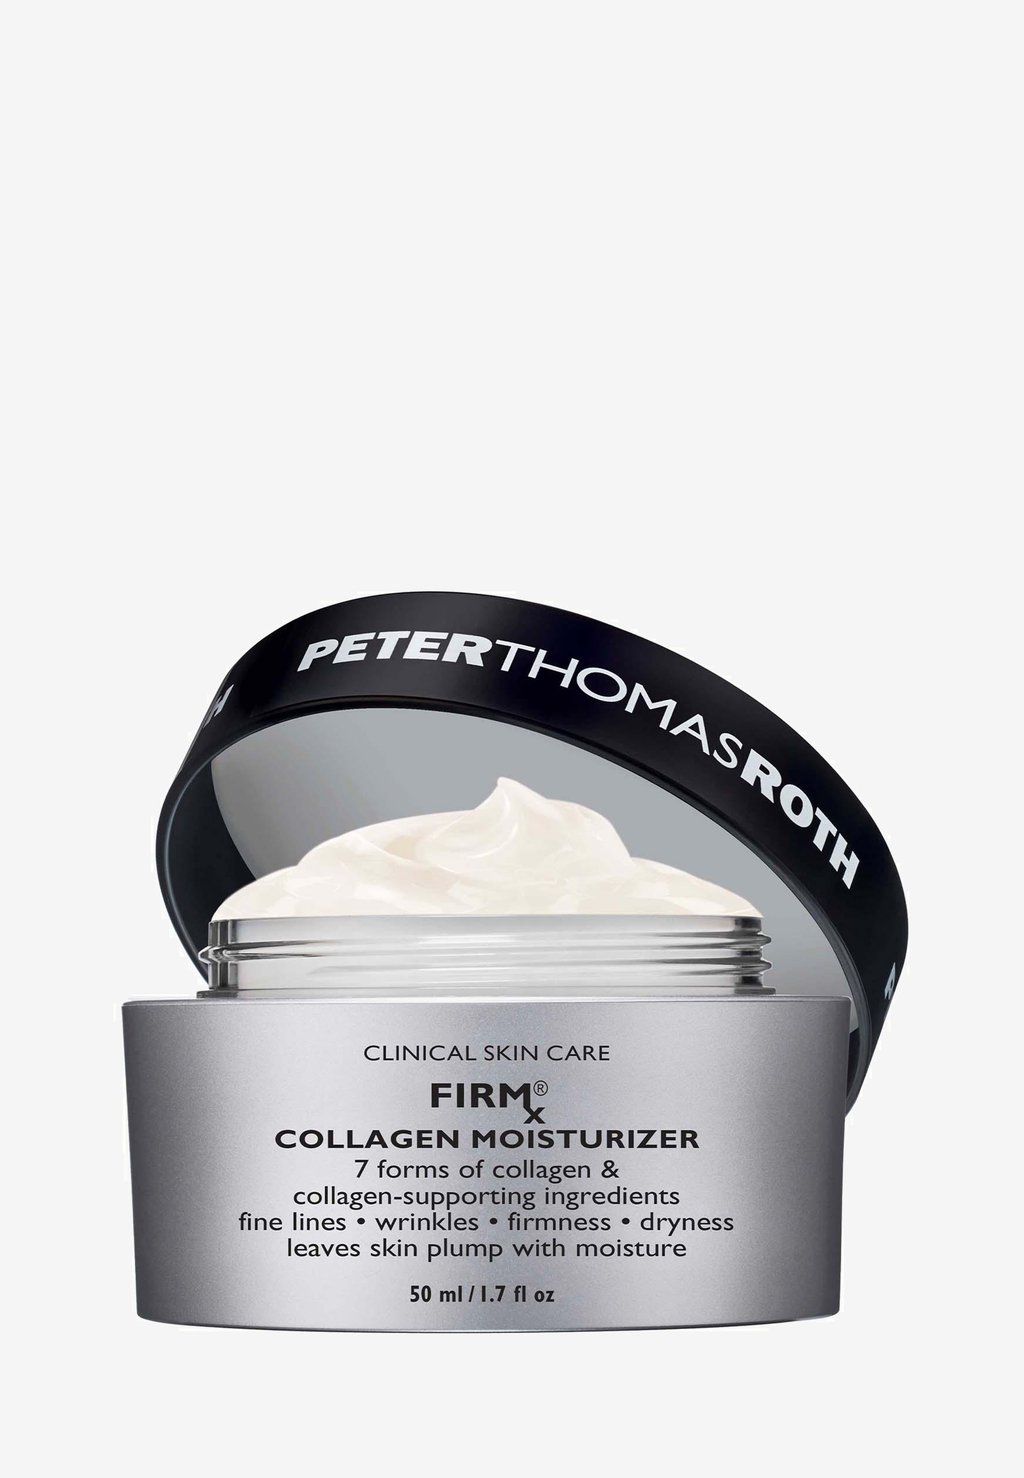 Дневной крем Firmx​ Collagen Moisturizer Peter Thomas Roth peter thomas roth full size hydration celebration 2 piece kit